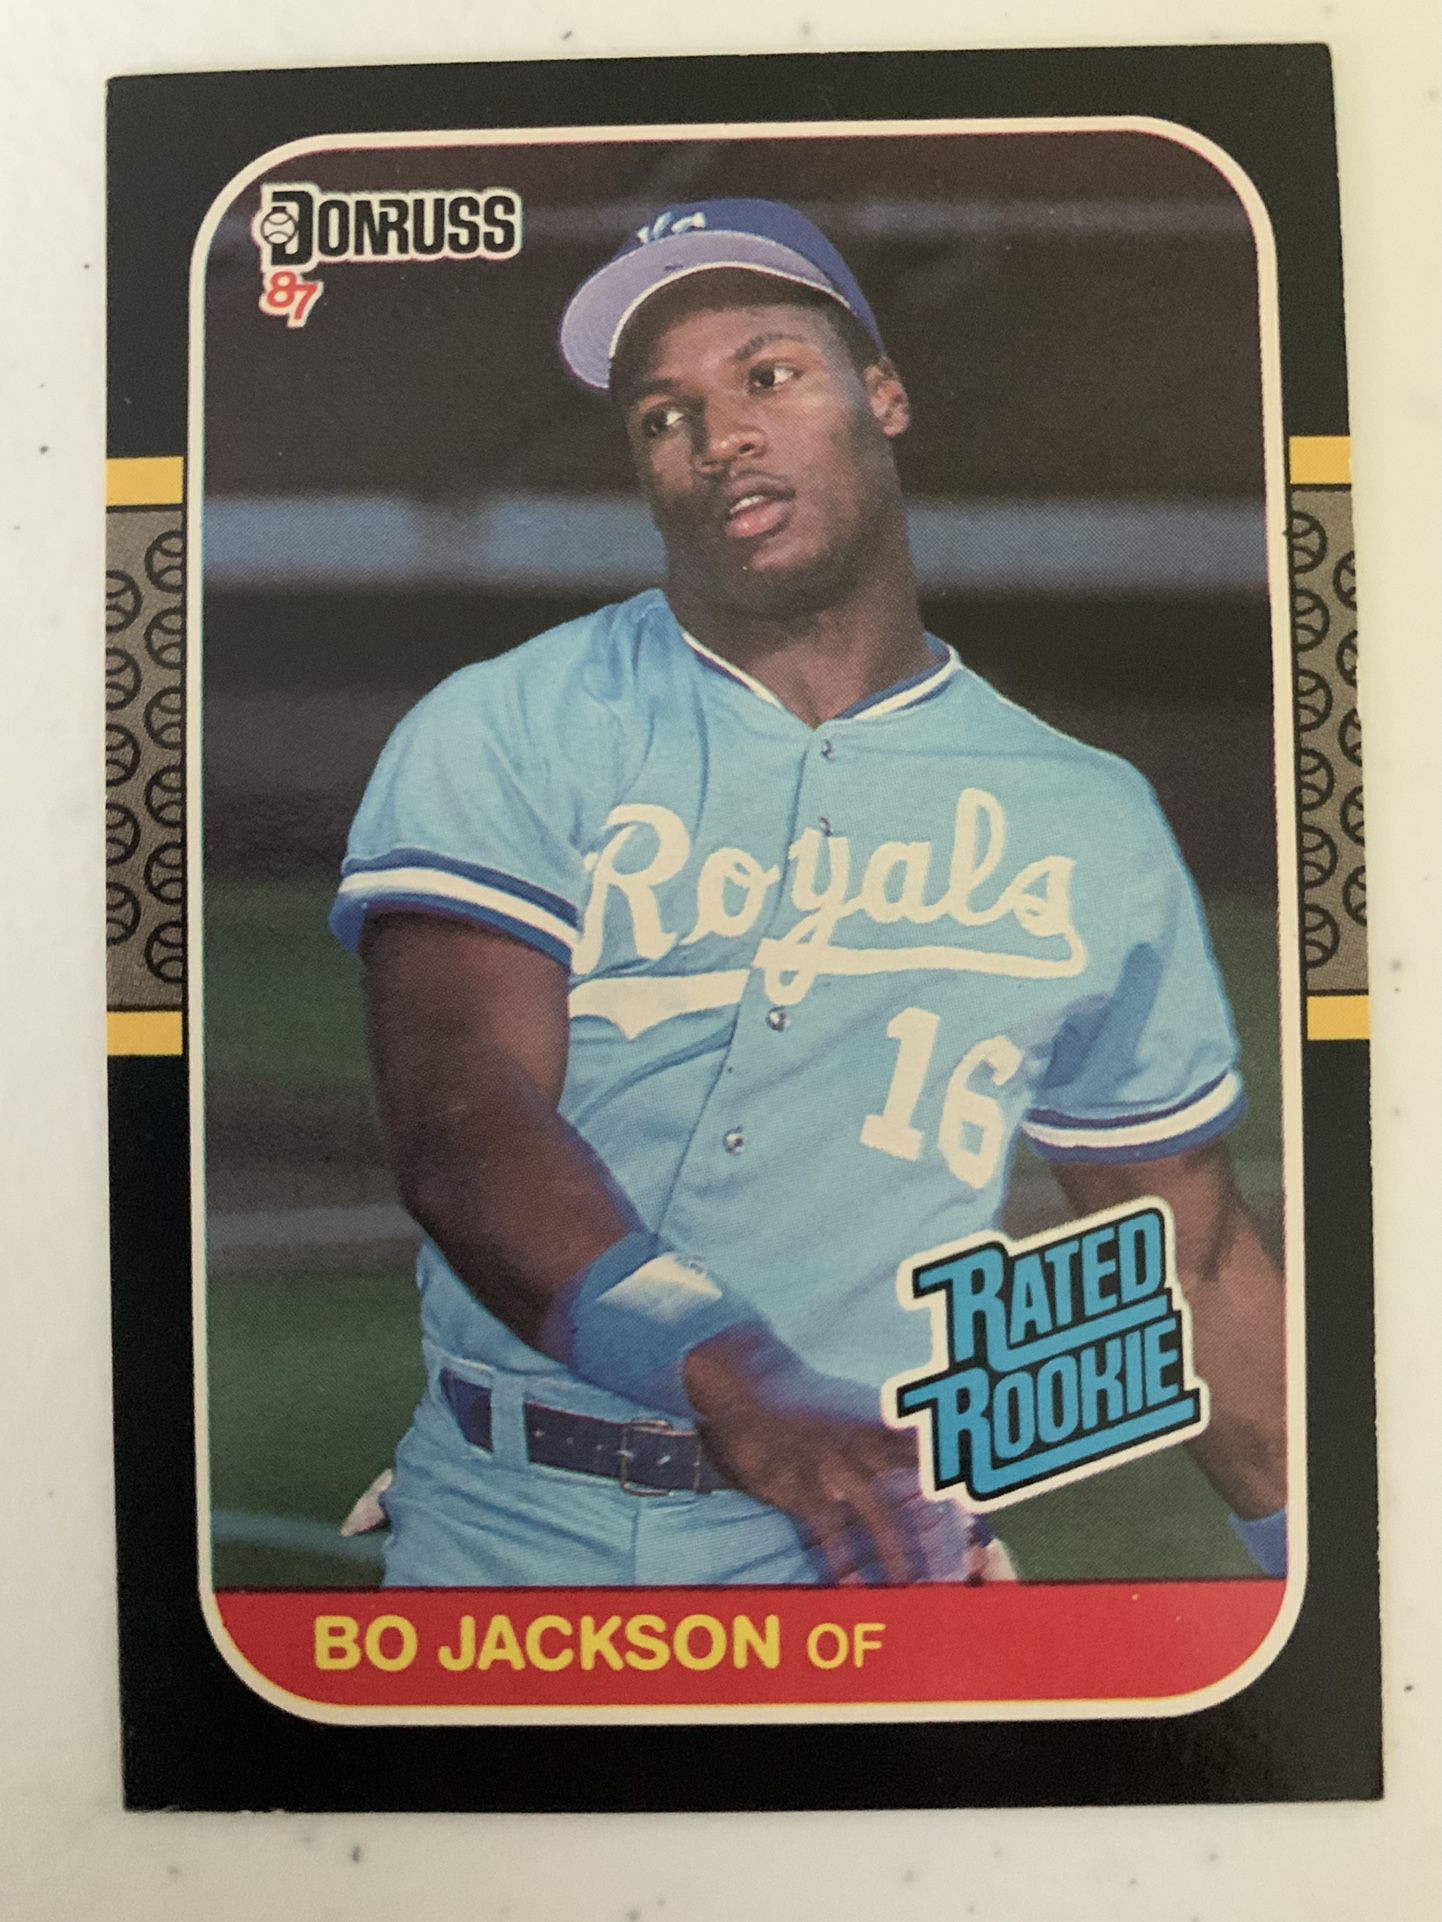 1987 Donruss Rated Rookie Bo Jackson Baseball Card 